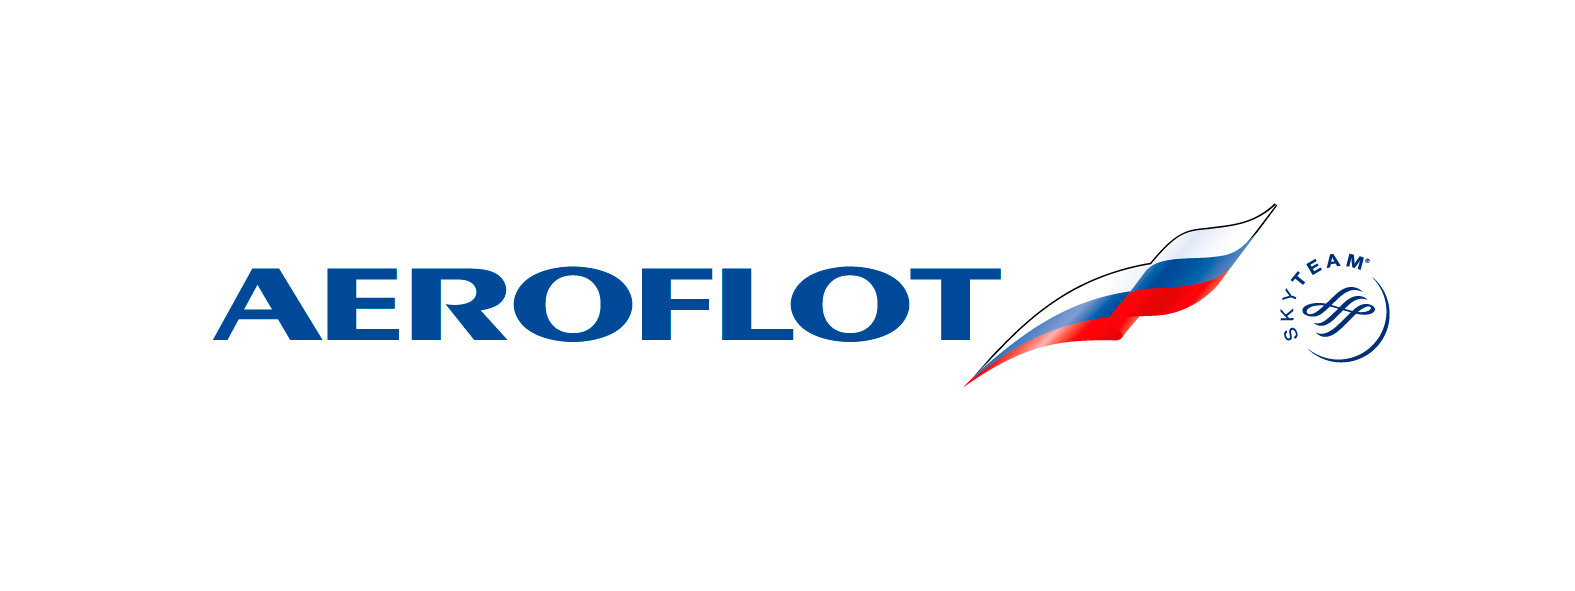 Download The Aeroflot Logo   Aeroflot Logo Png - Aeroflot Vector, Transparent background PNG HD thumbnail